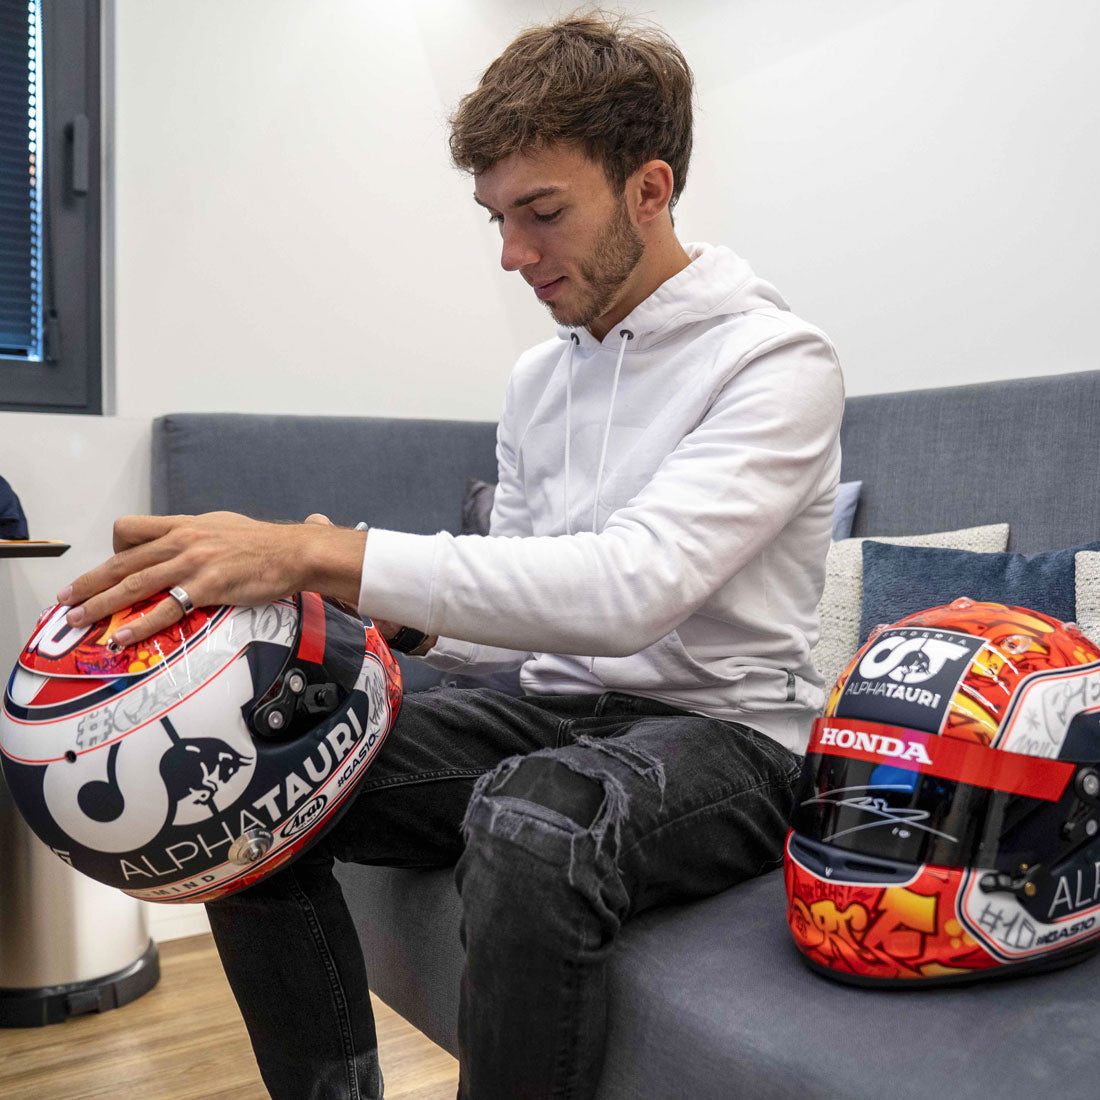 Pierre Gasly 2020 Signed Replica Helmet - Italian GP